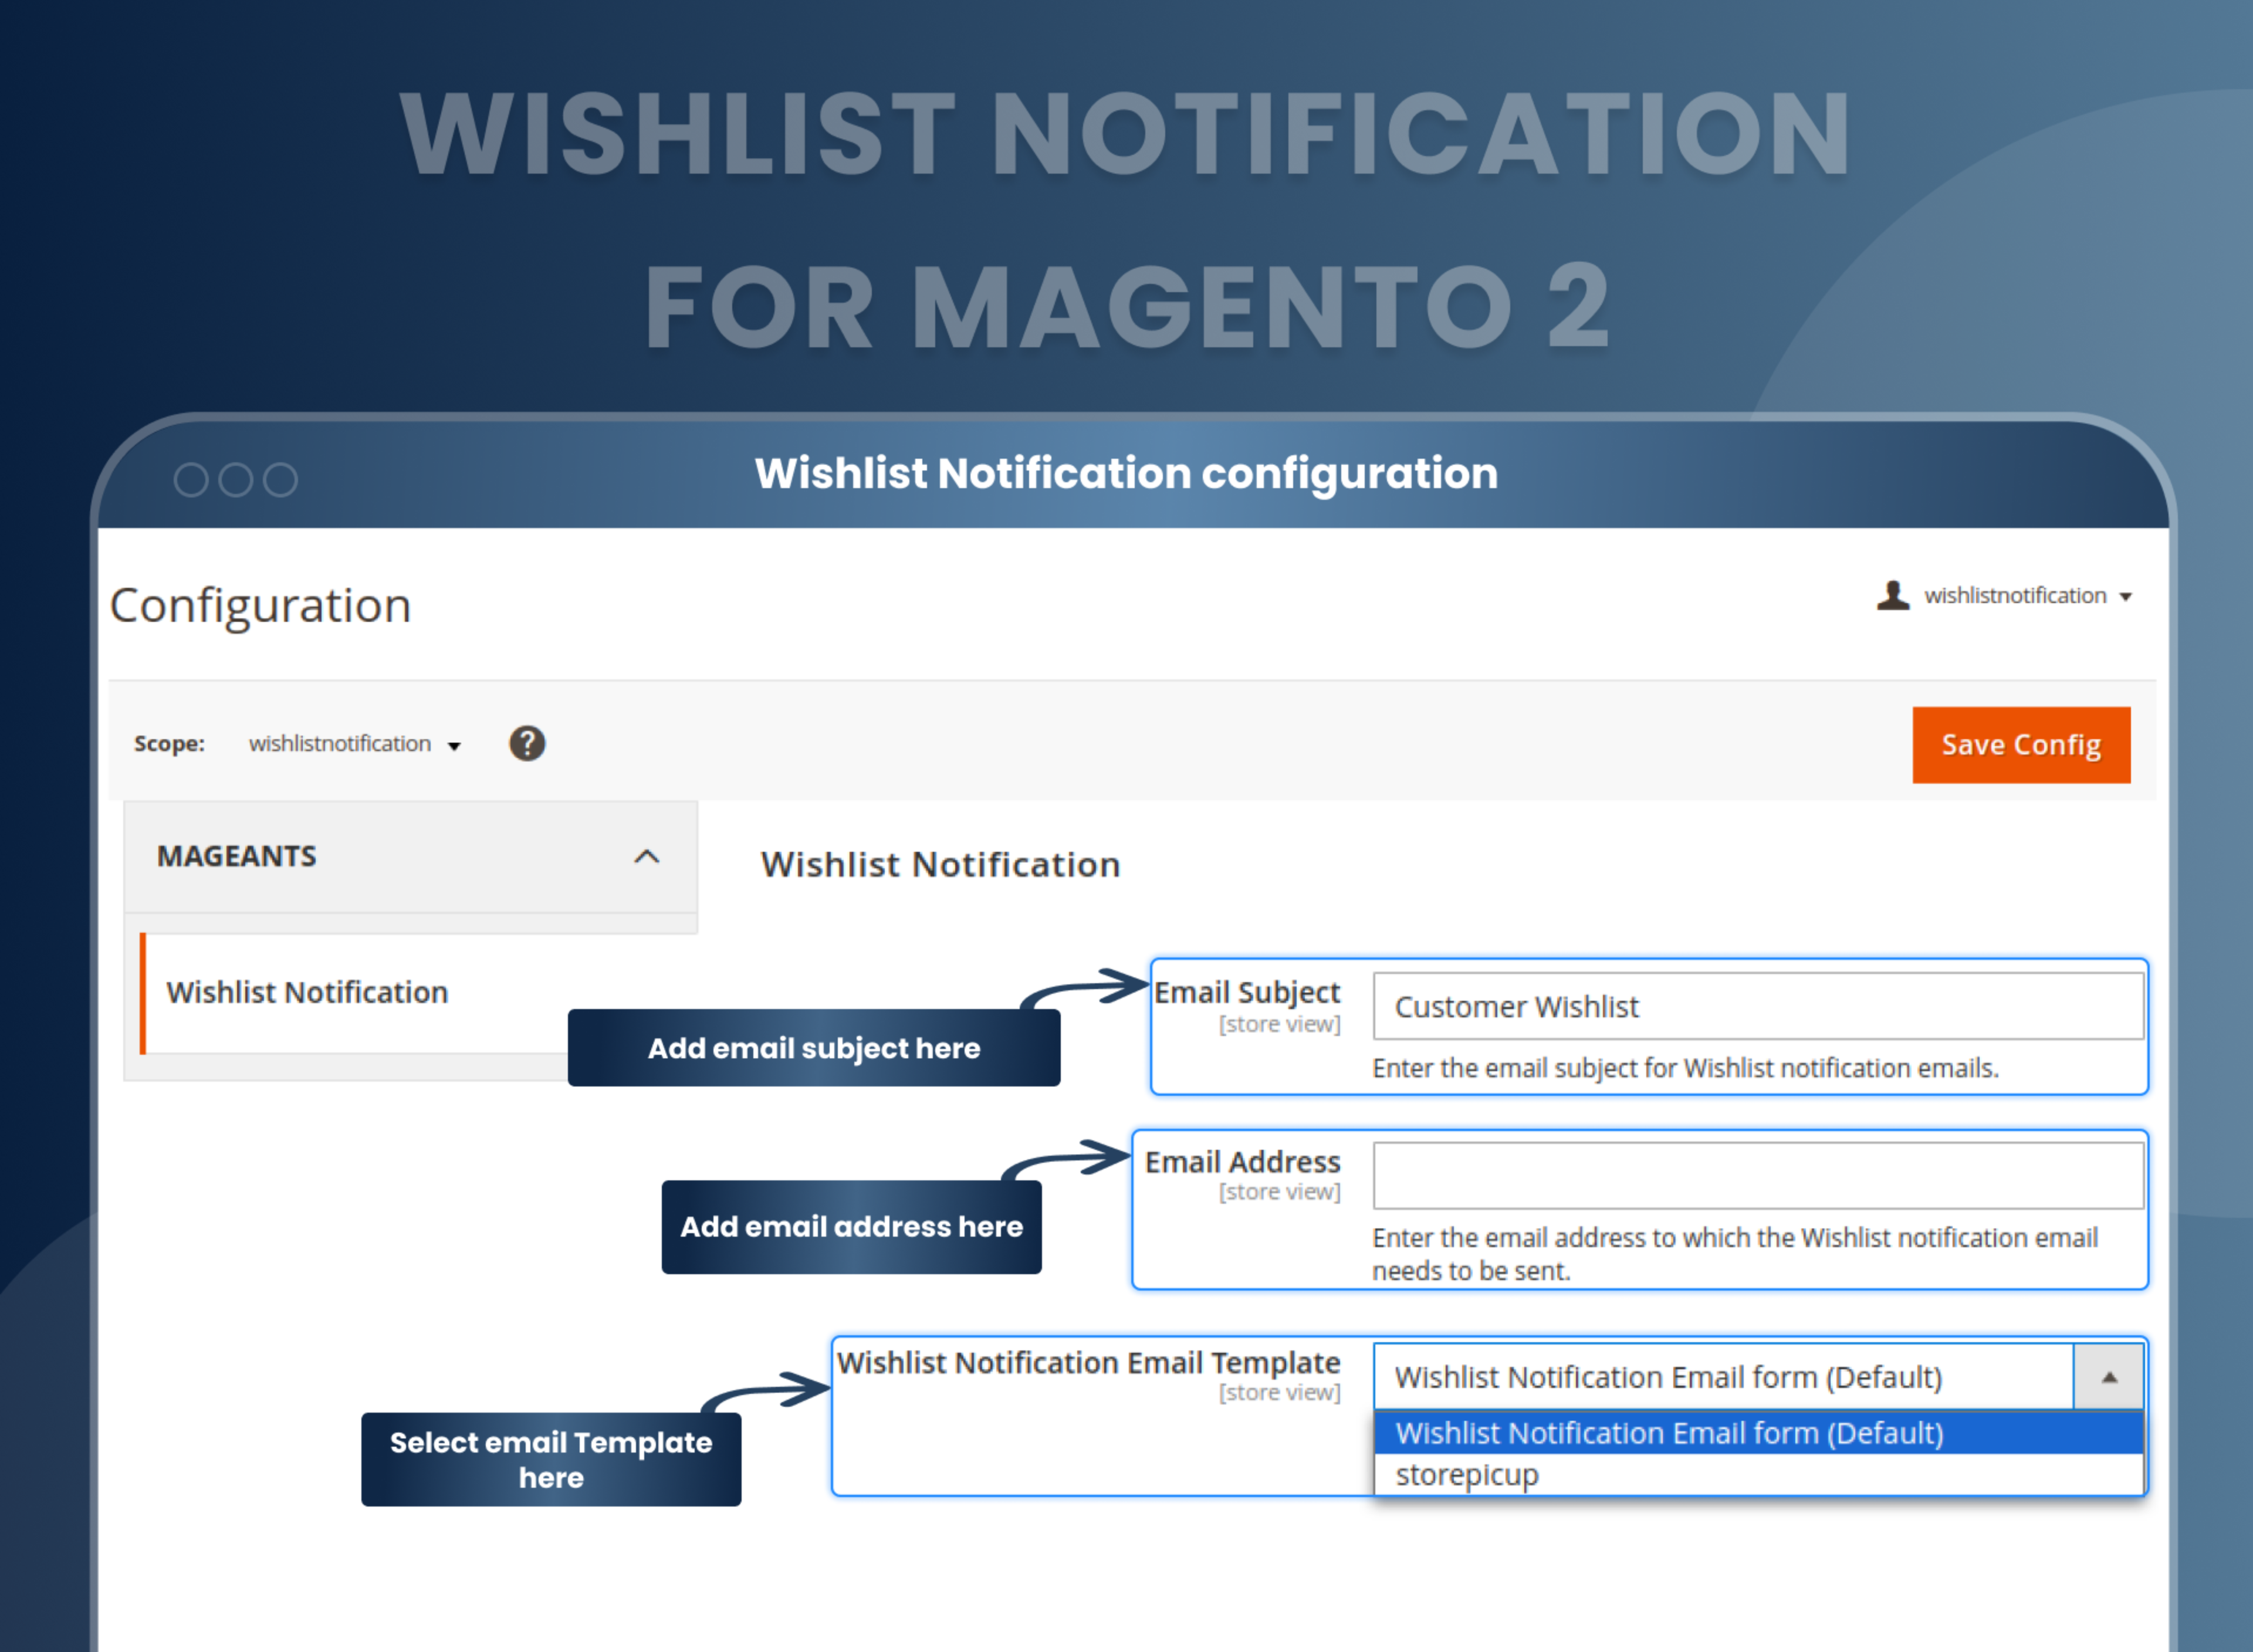 Wishlist Notification configuration